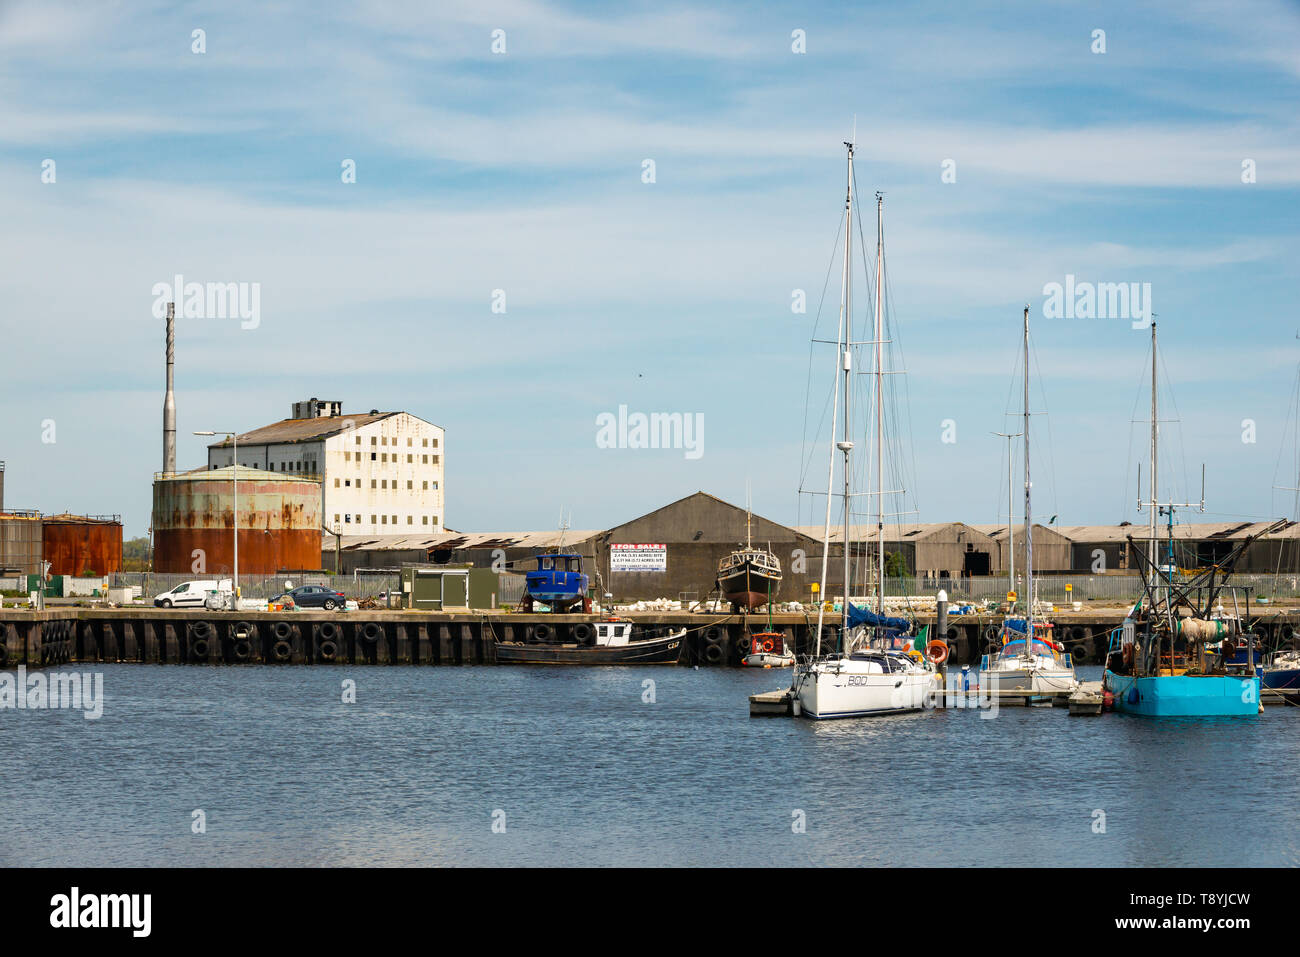 Fishery harbour in Ireland Stock Photo